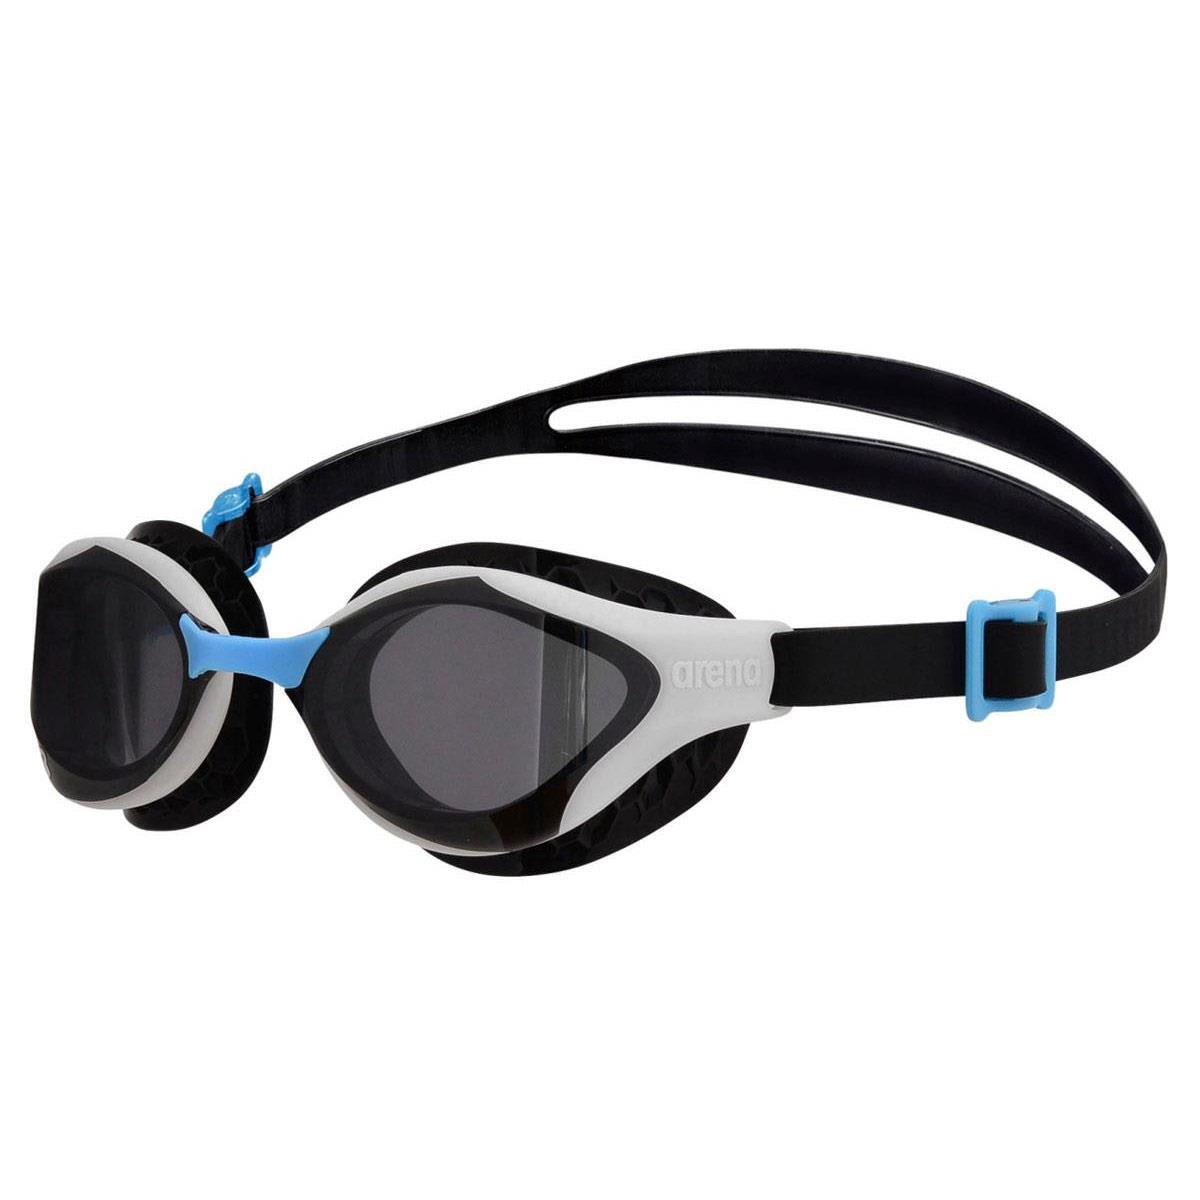 ARENA Arena Air-Bold Swipe Goggles - Smoke/ White/ Black